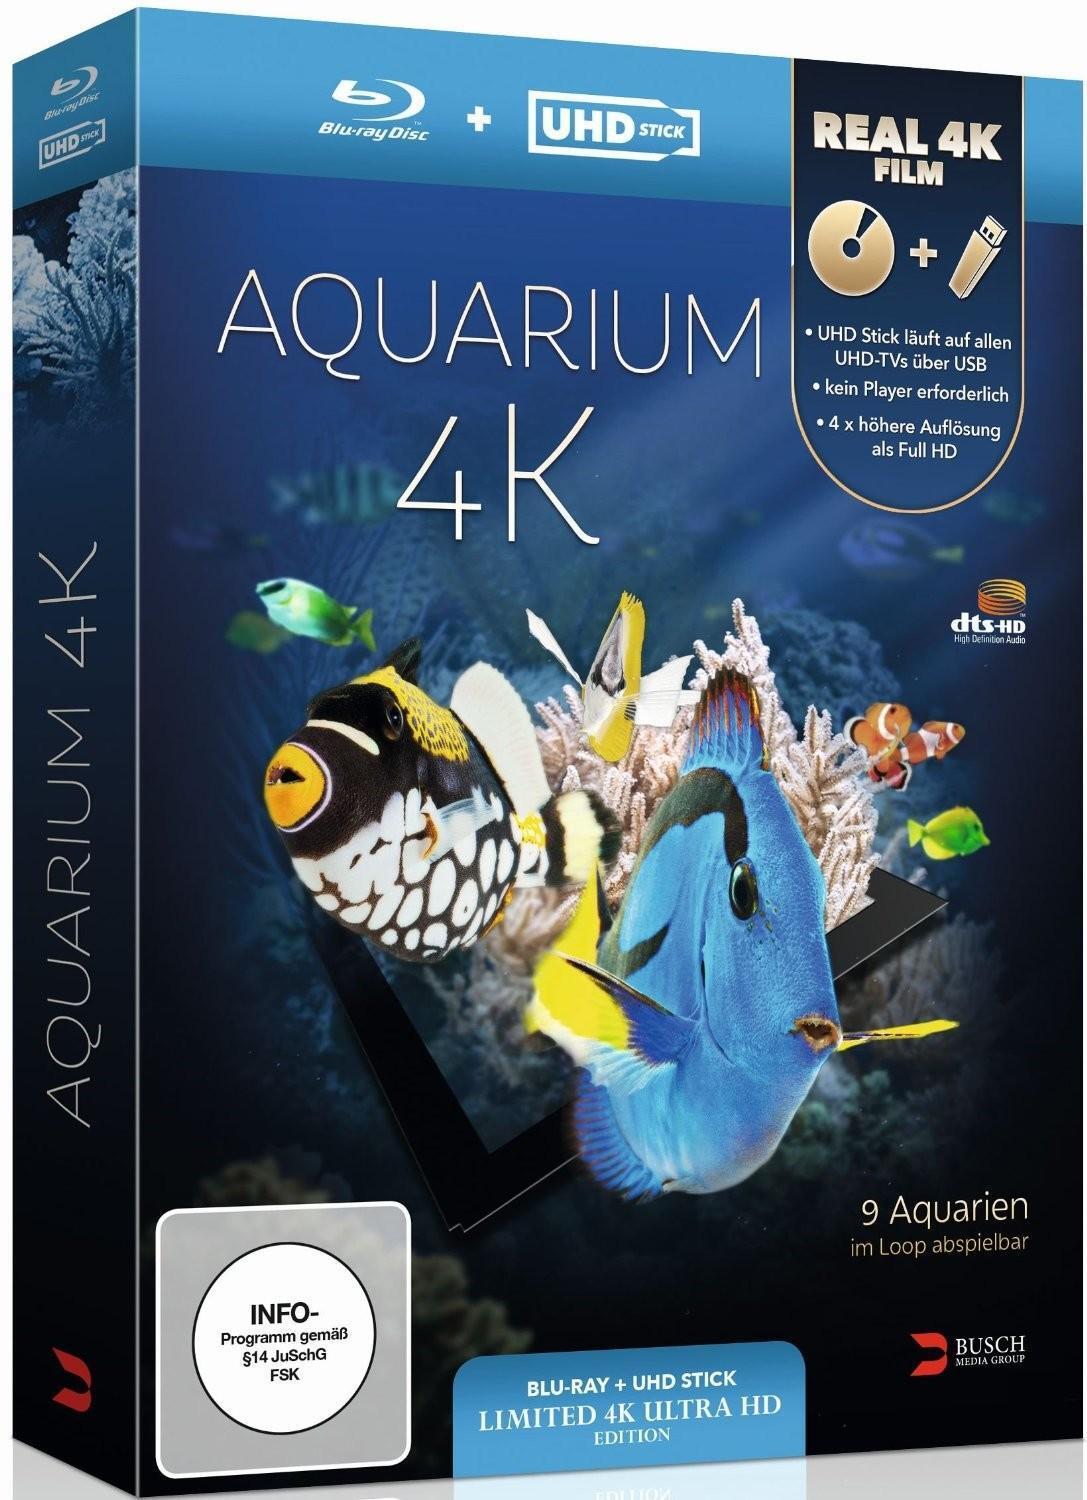 Cover: 4260080323758 | Aquarium | Blu-ray + UHD Stick in Real 4K | Blu-ray Disc | Deutsch